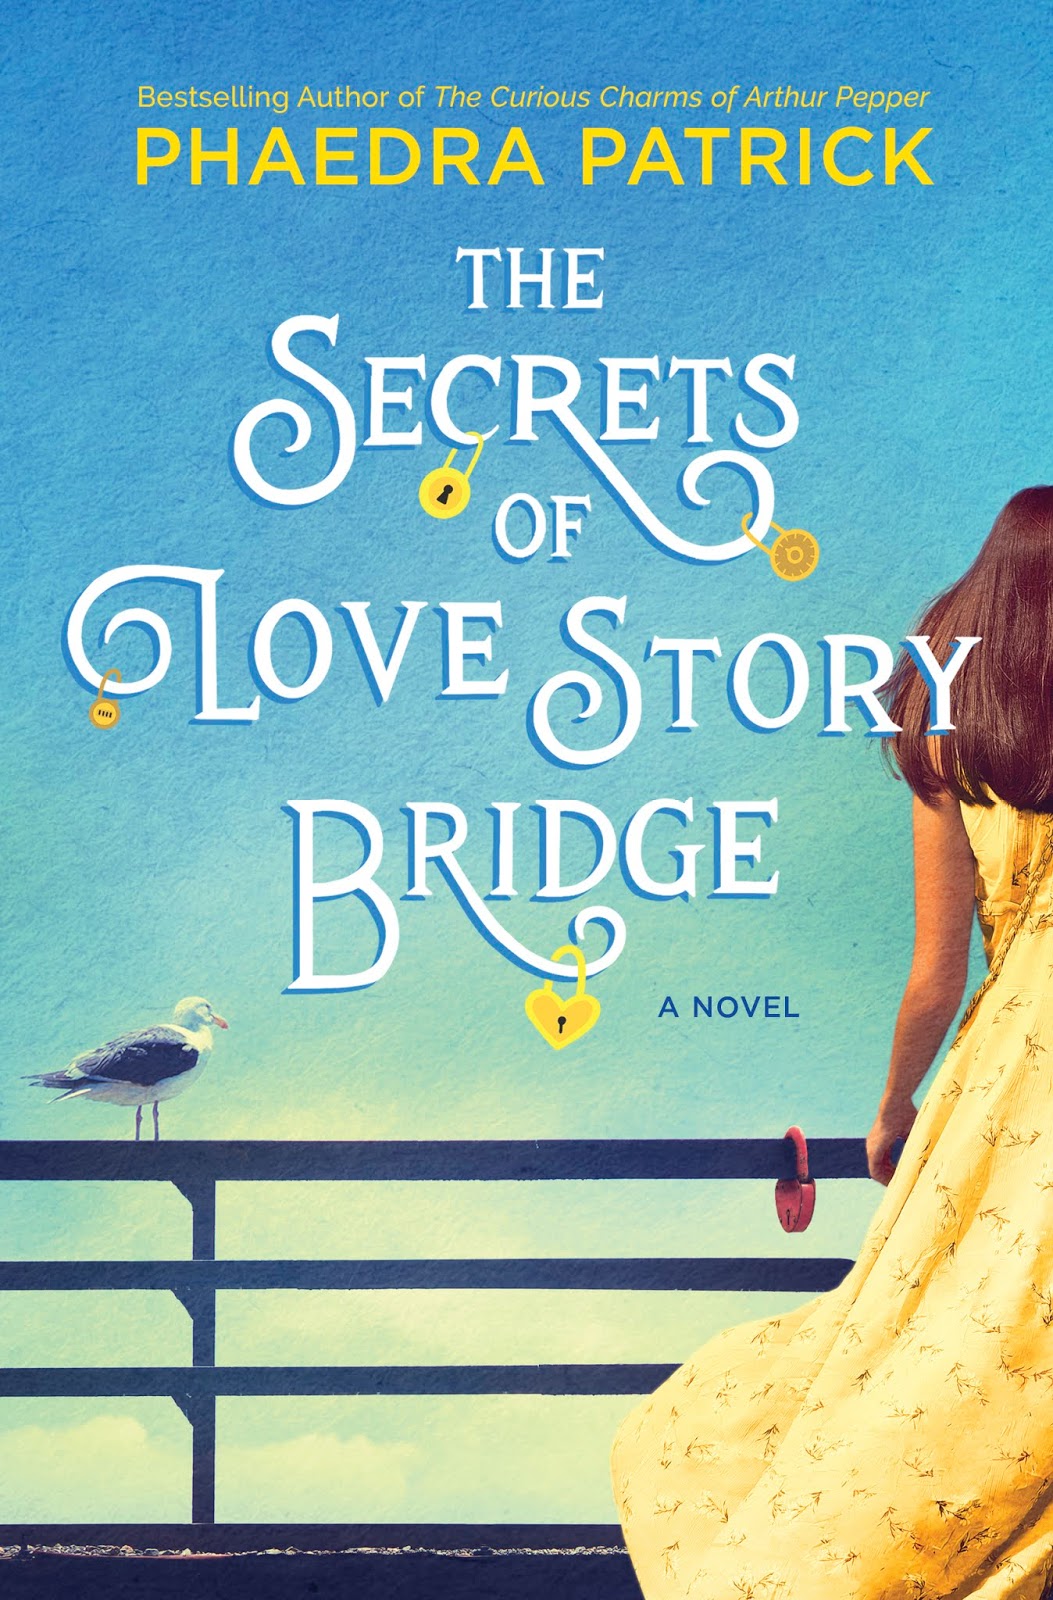 Blog Tour Stop & Excerpt: The Secrets of Love Story Bridge by Phaedra Patrick